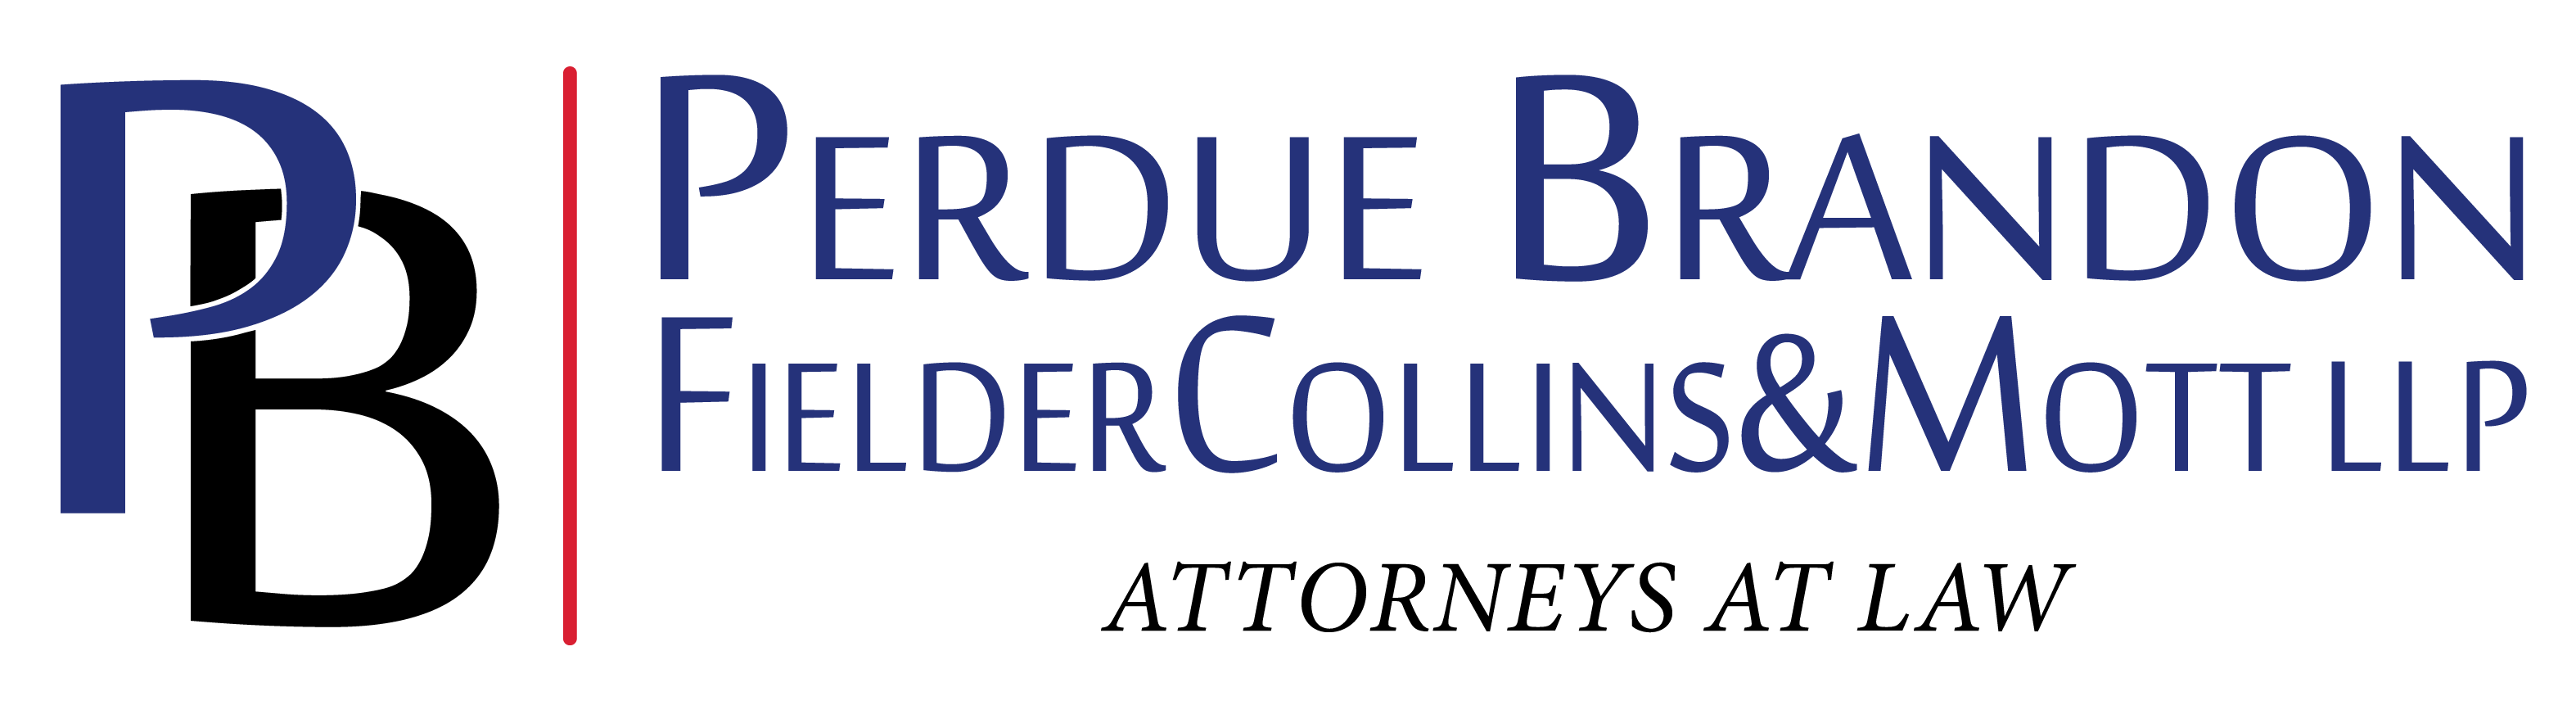 Perdue Brandon Fielder Collins & Mott‚ LLP Logo